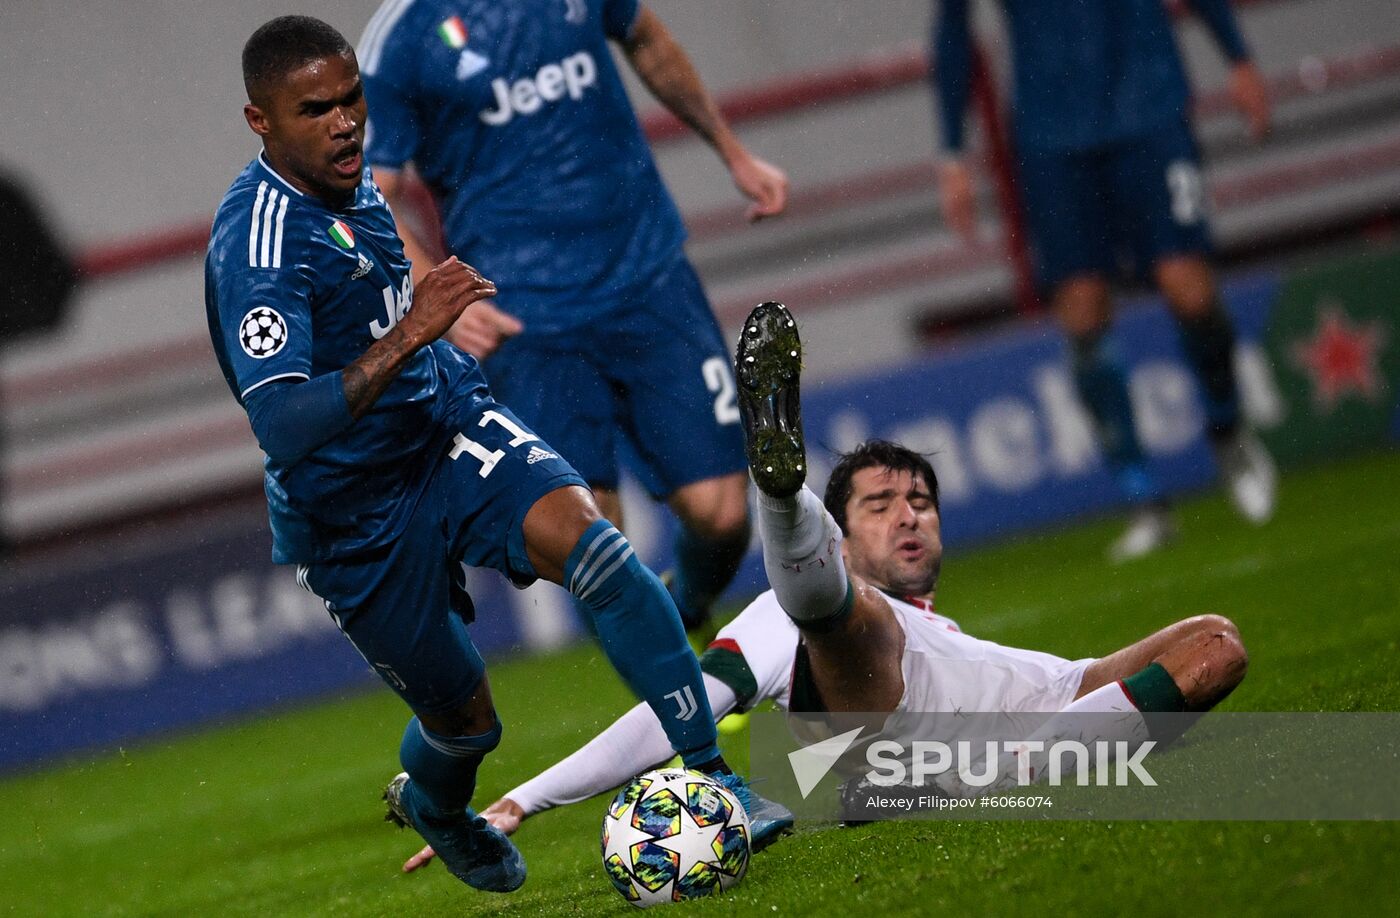 Russia Soccer Champions League Lokomotiv - Juventus